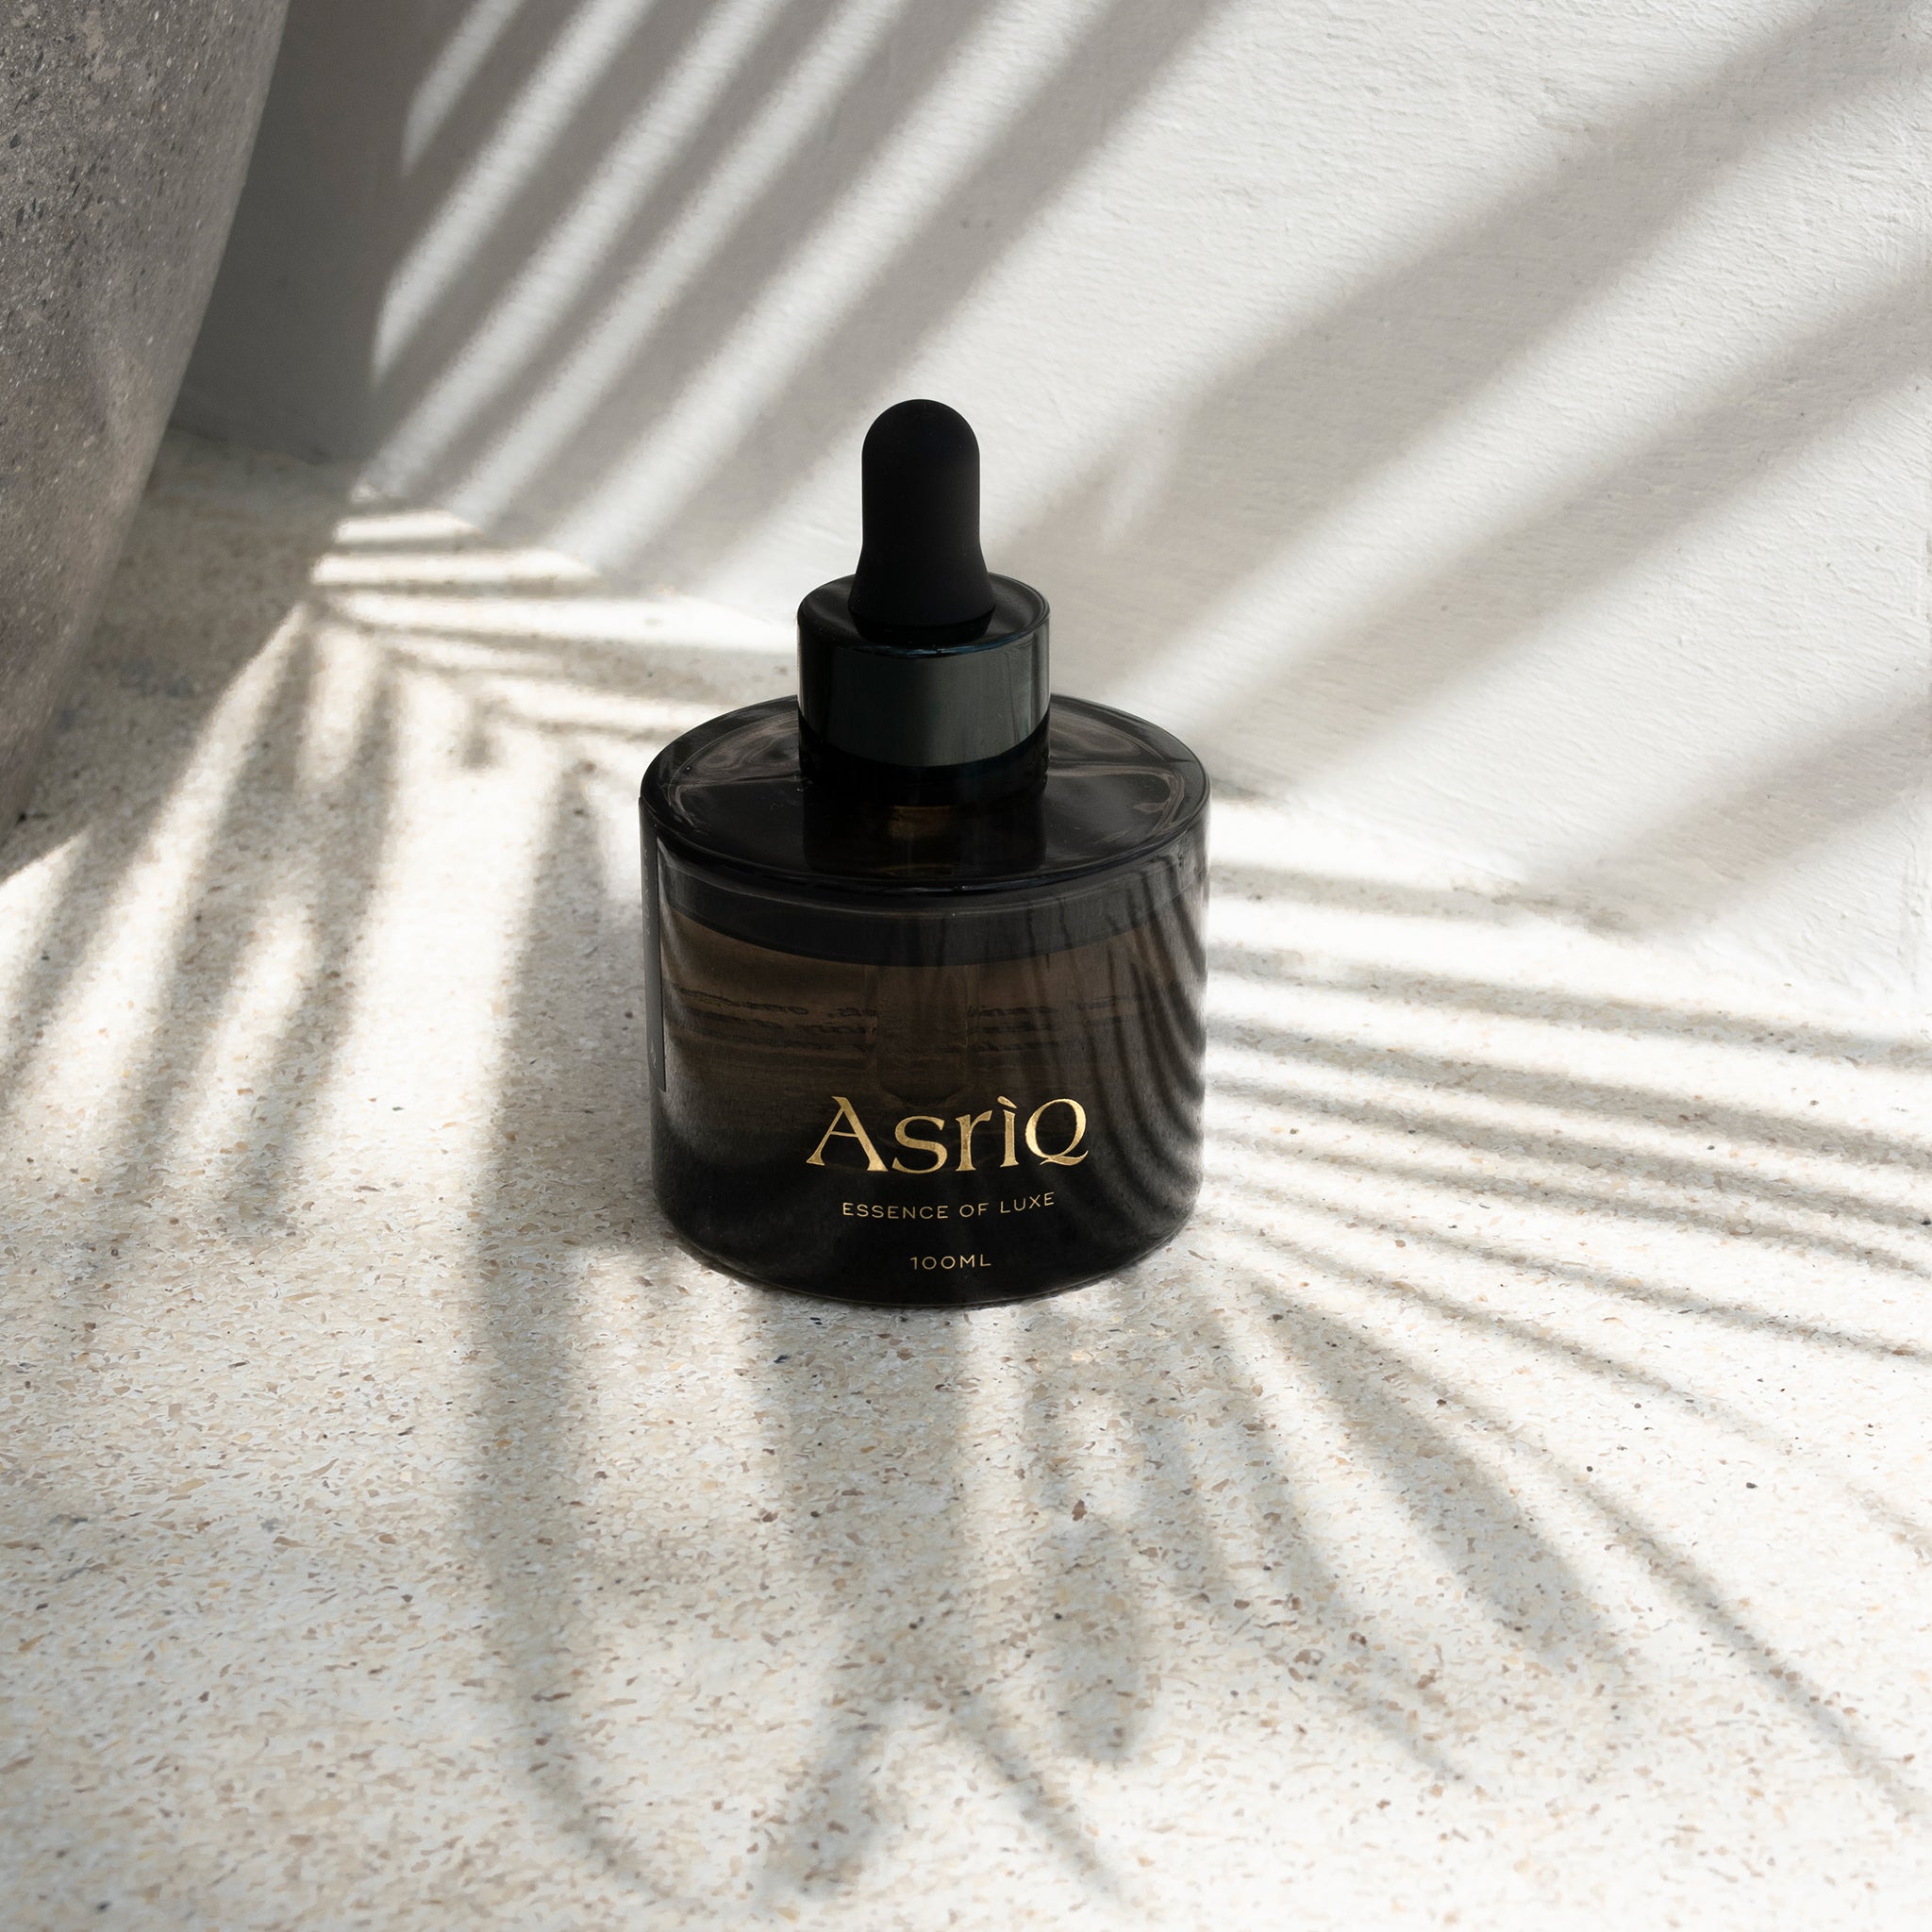 Luxury Australian Perfumed Body Oil designed to nourish your skin